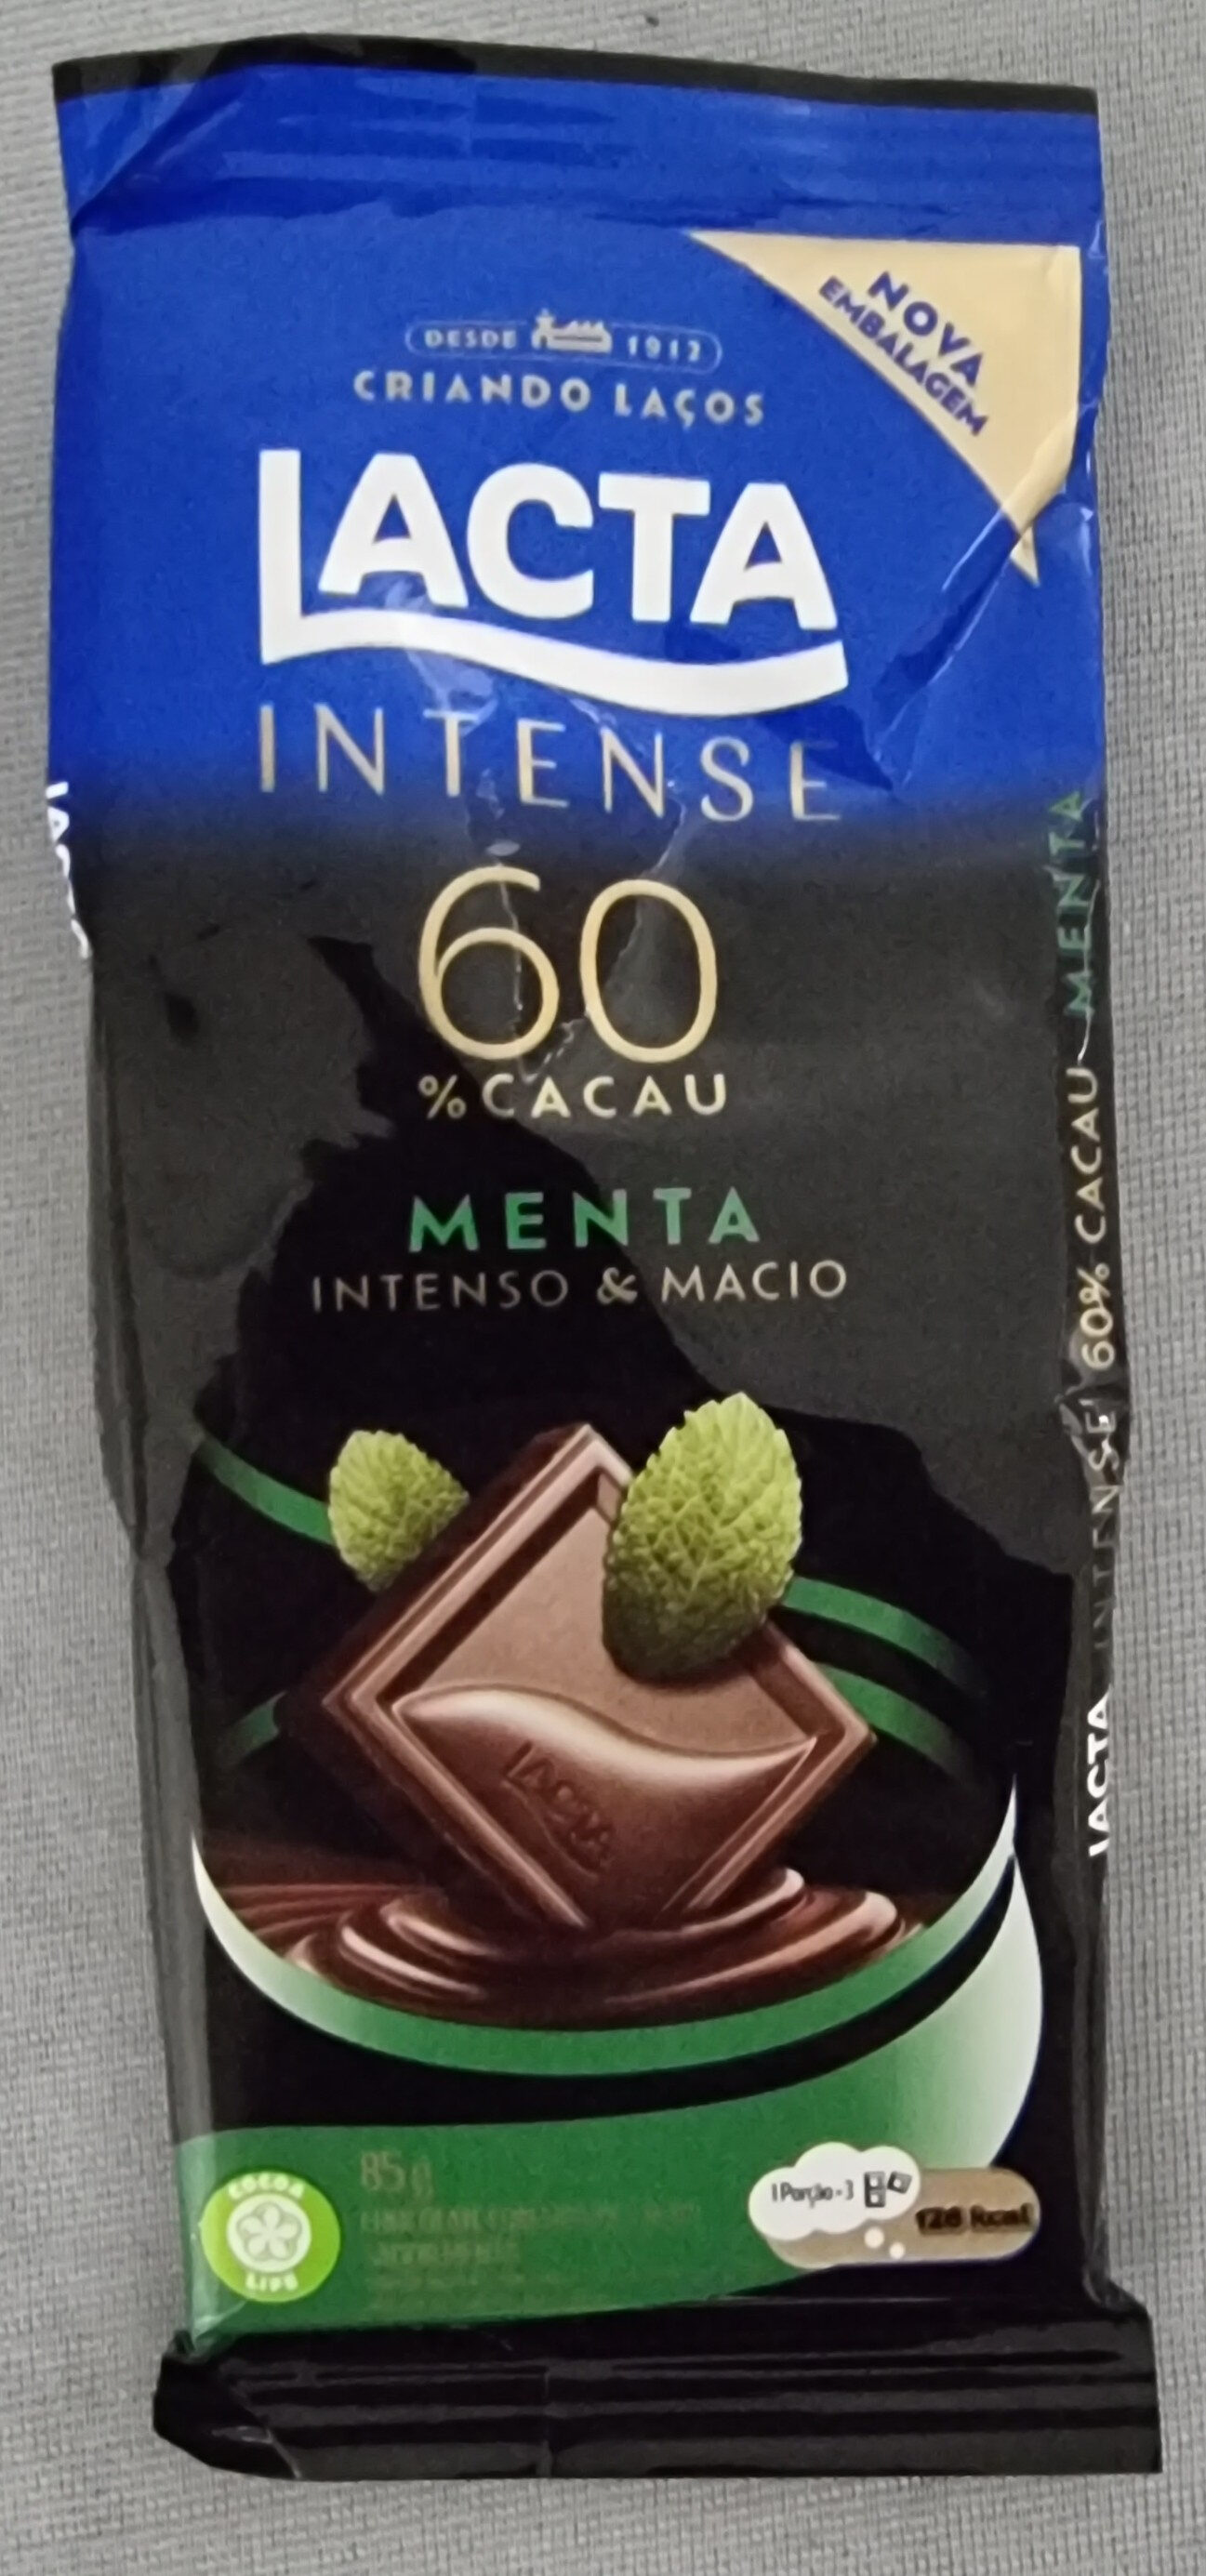 Lacta Intense Chocolate 60% Cacau Sabor Menta Intenso & Macio - Product - pt